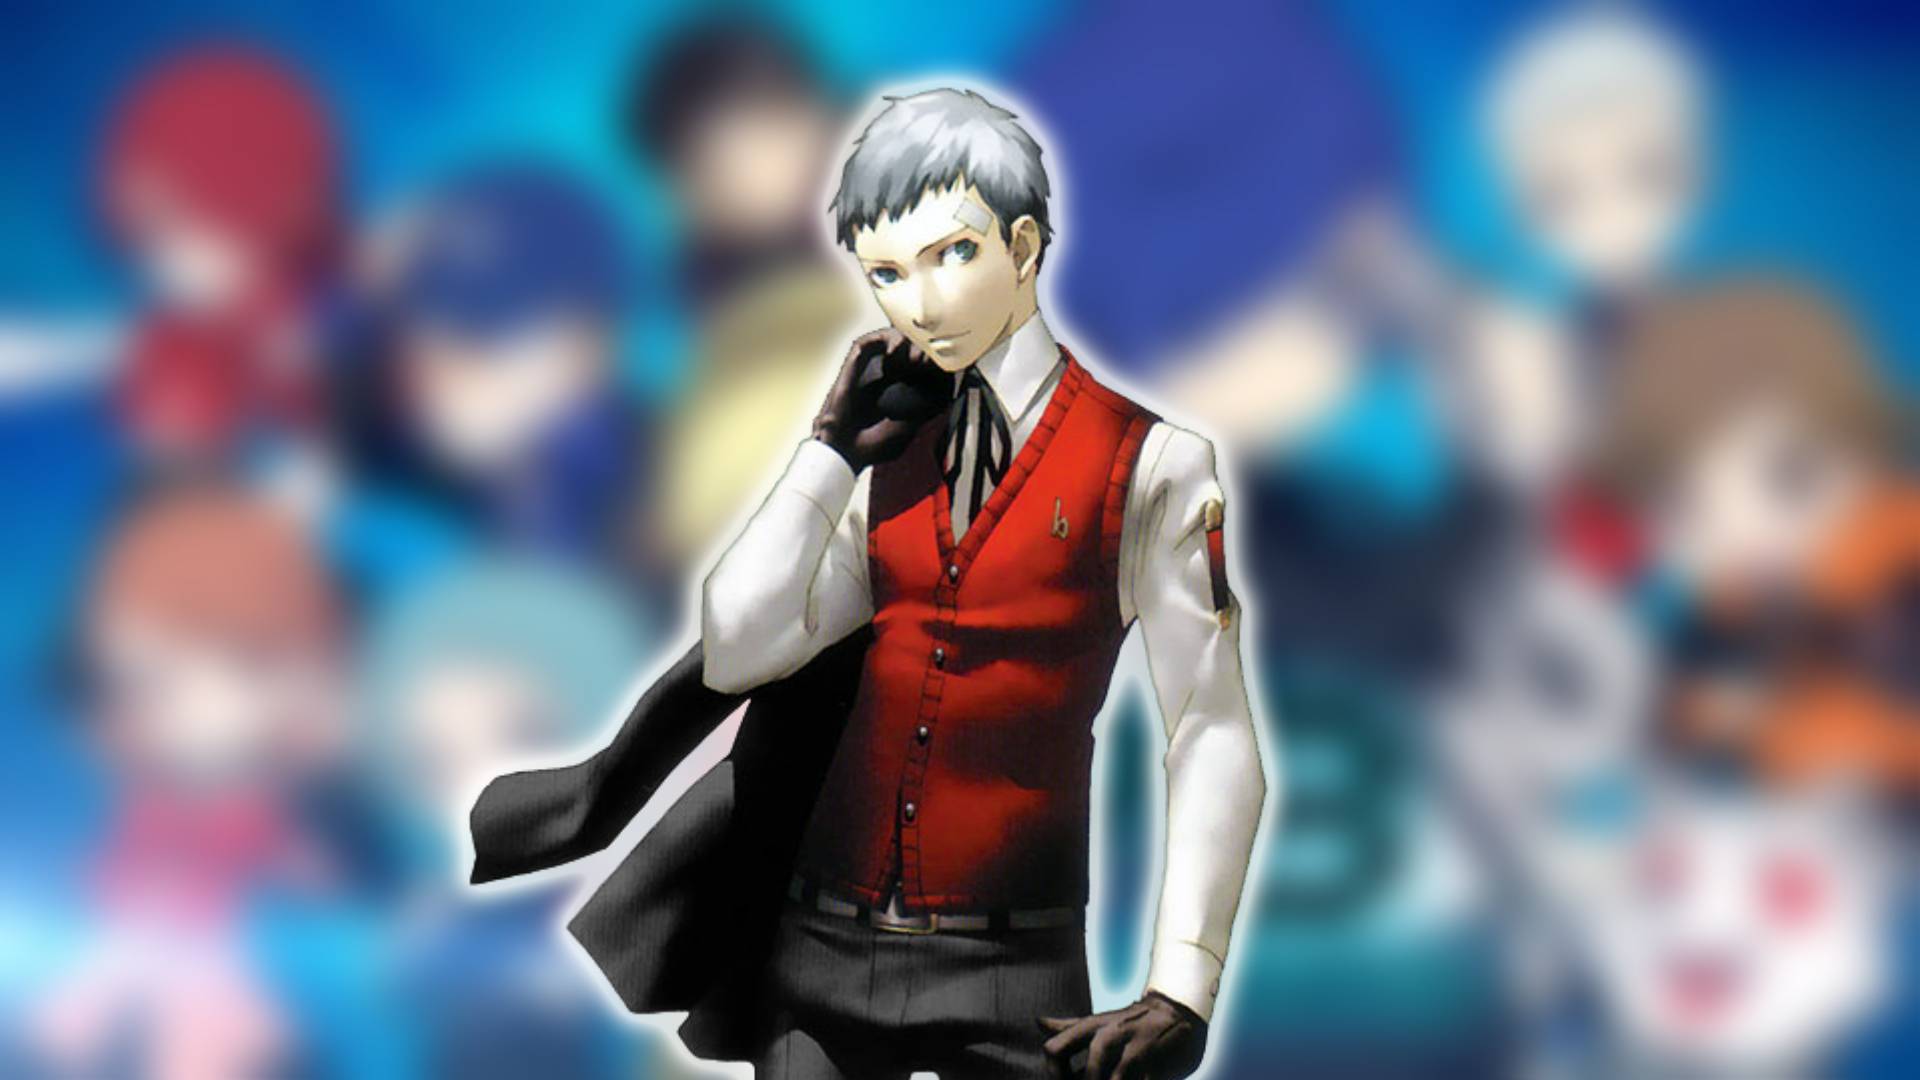 Persona 3 personagens: Akihiko Sanada de Persona 3 Portable são visíveis